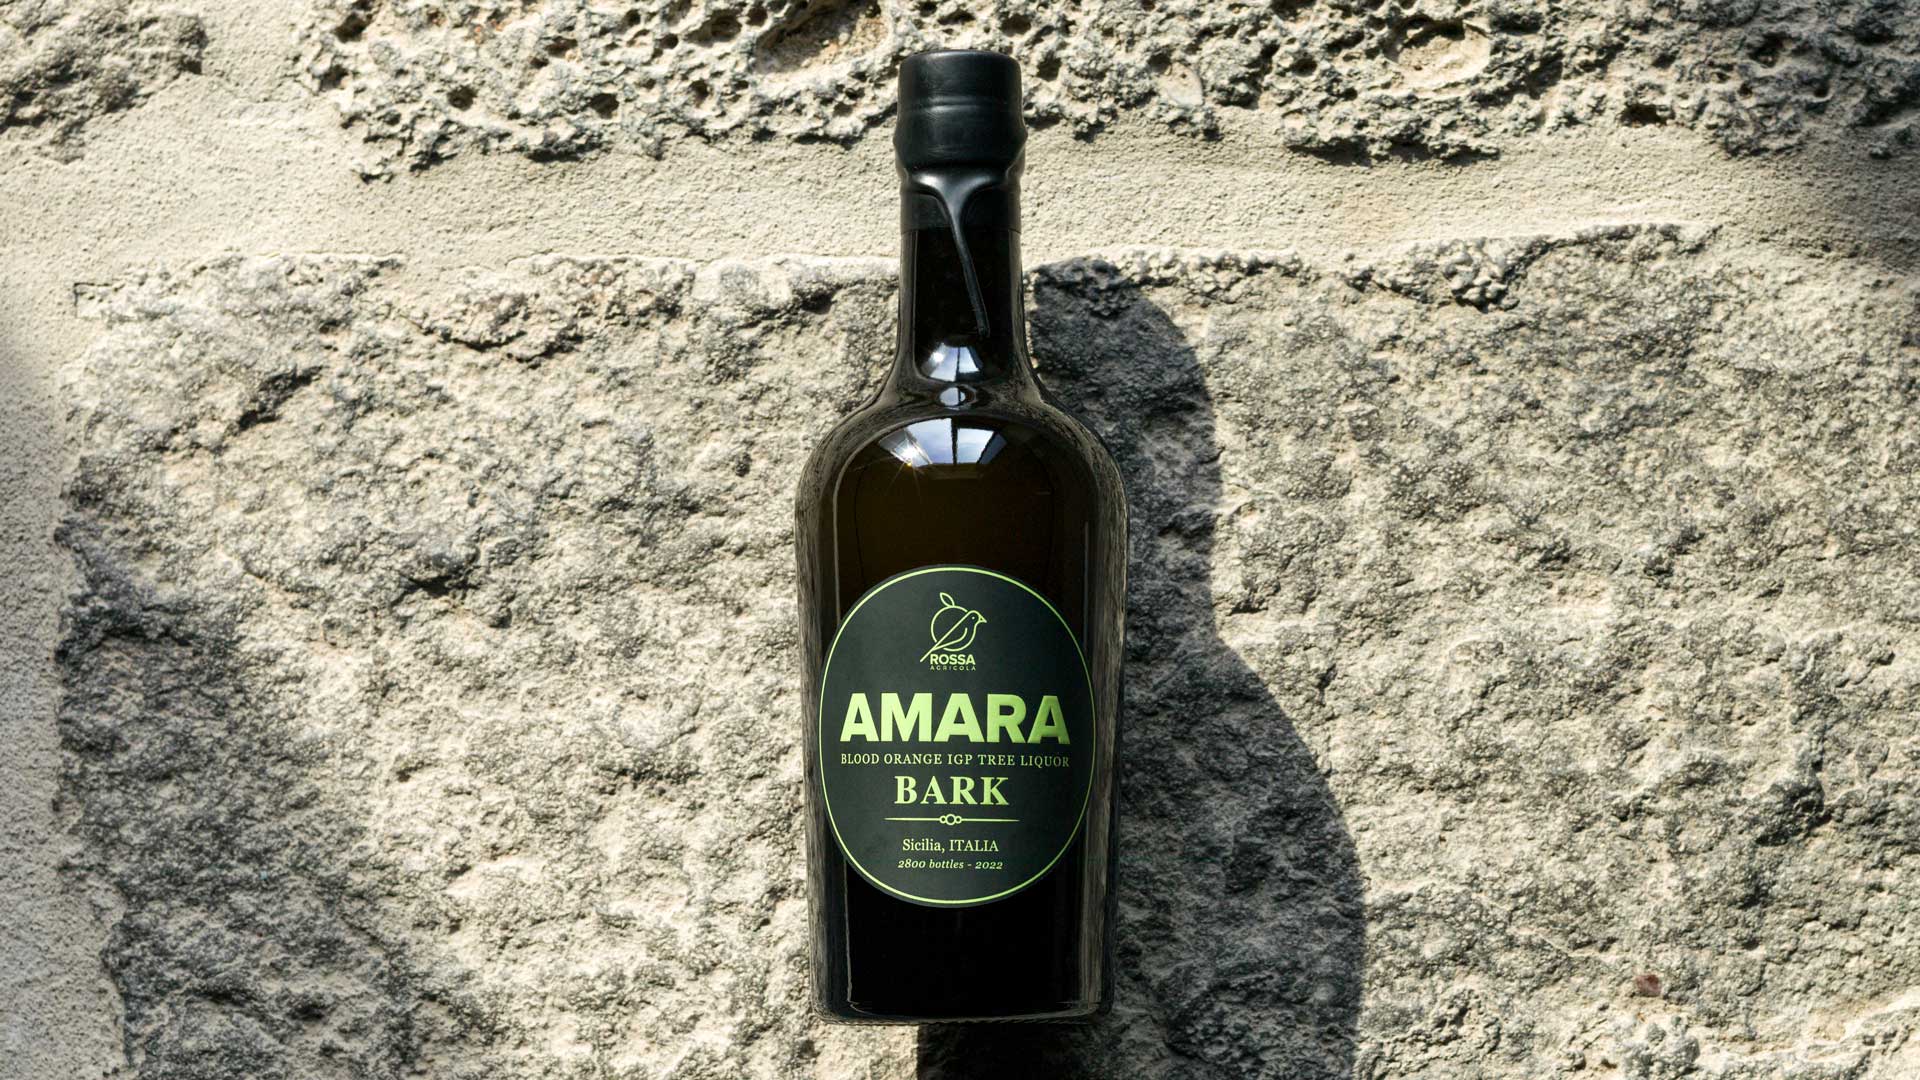 amara-bark-limited-edition-robb-report-italia